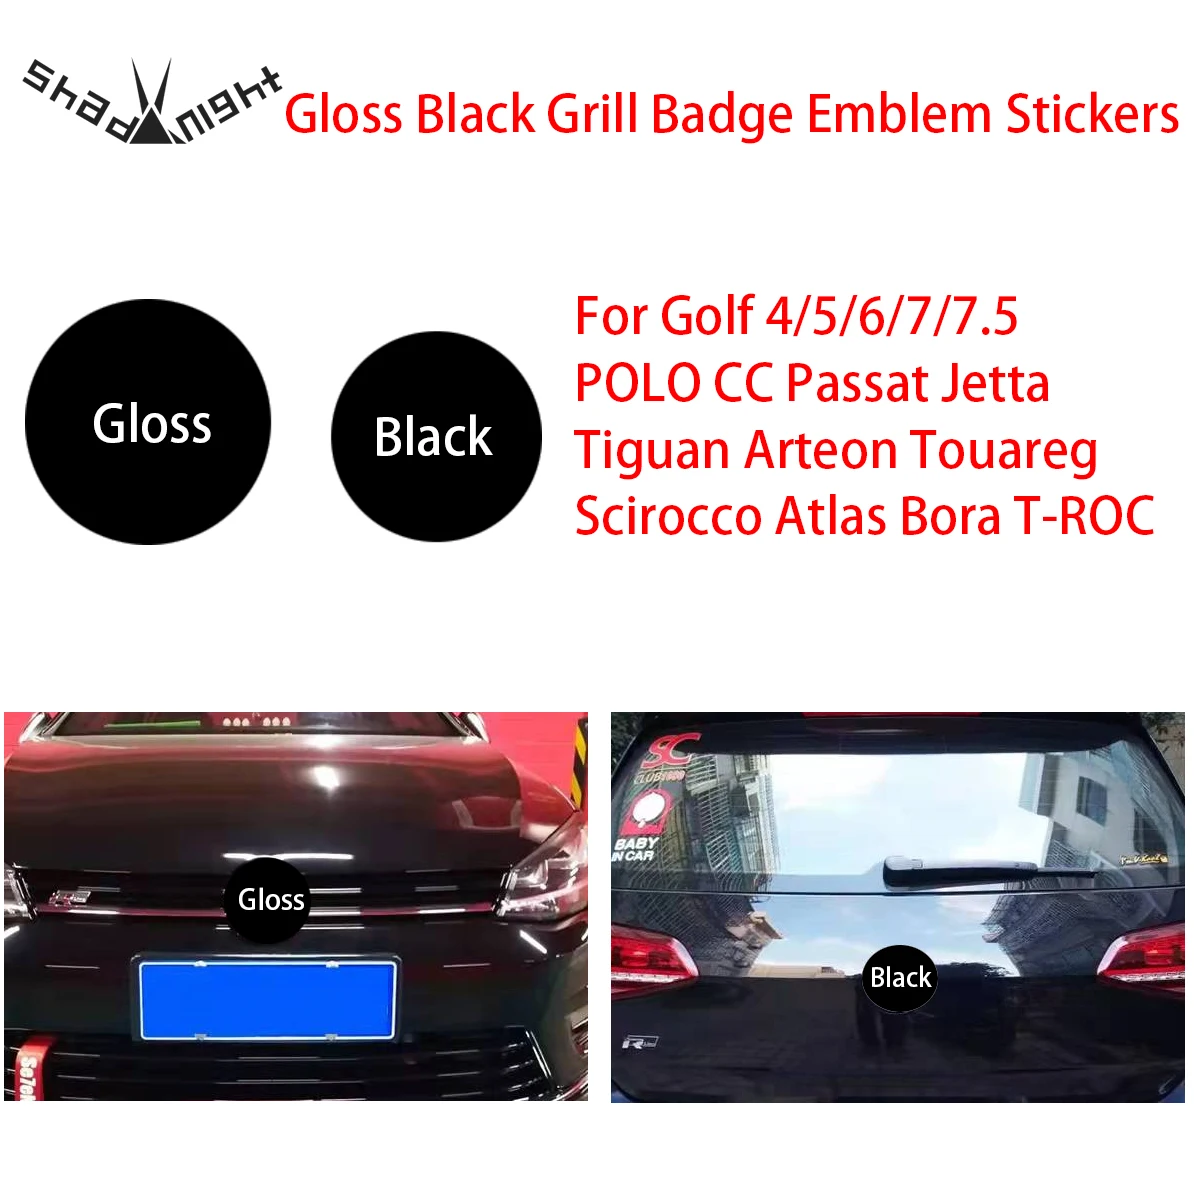 

Gloss Black logo sticker Front Grill Badge or Rear Trunk Lid Emblem for Golf 6/7/7.5 POLO CC Jetta Tiguan Scirocco Atlas Bora